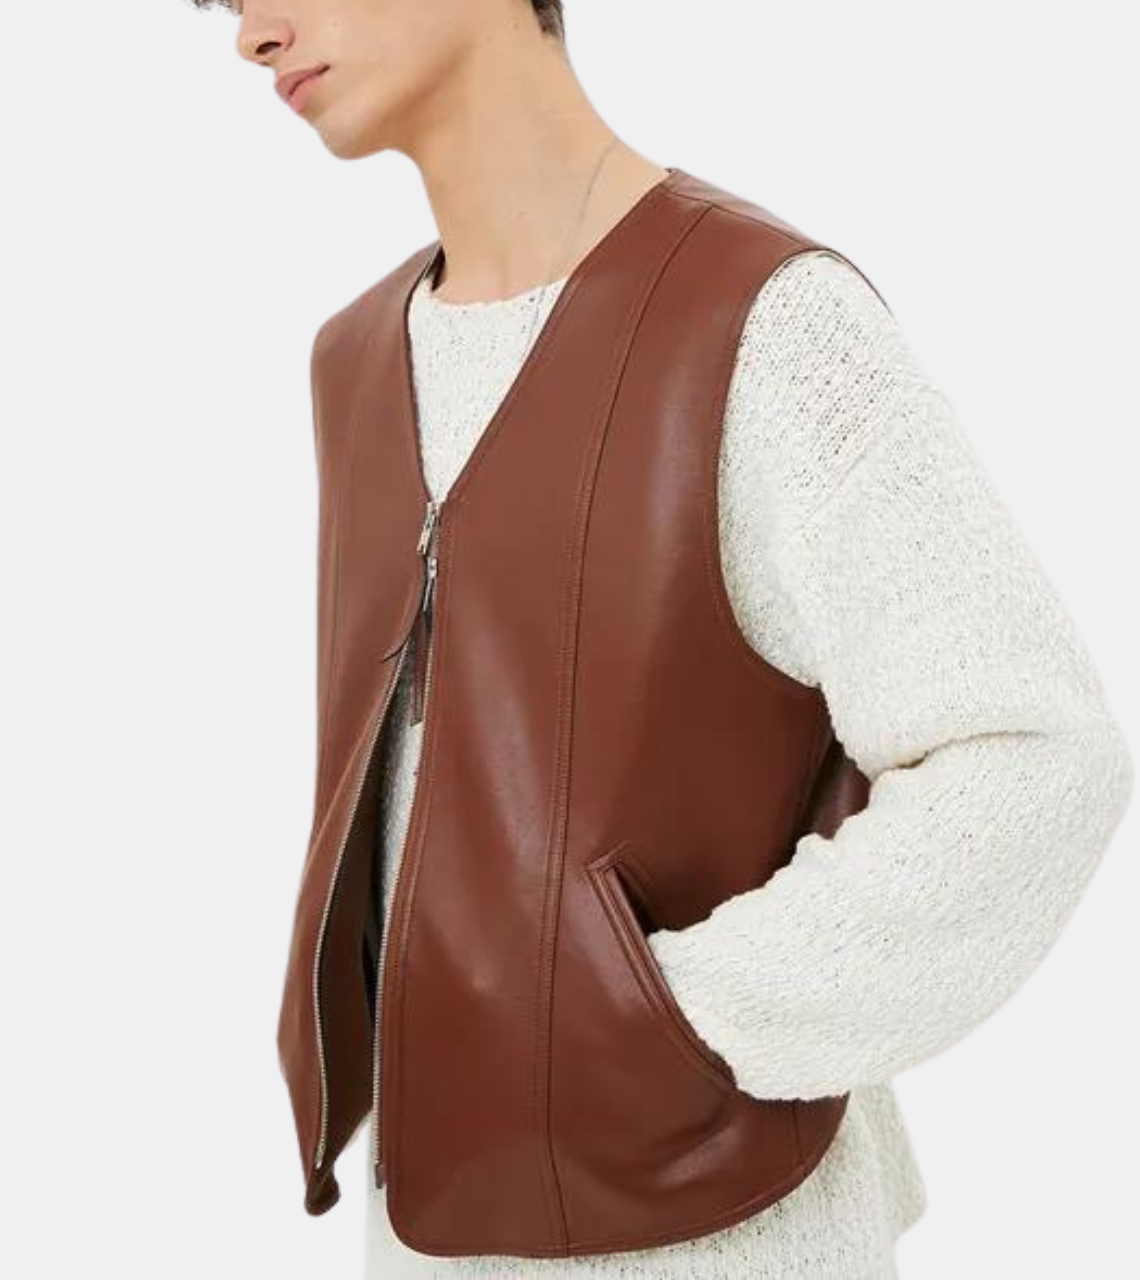  Brown Leather Vest